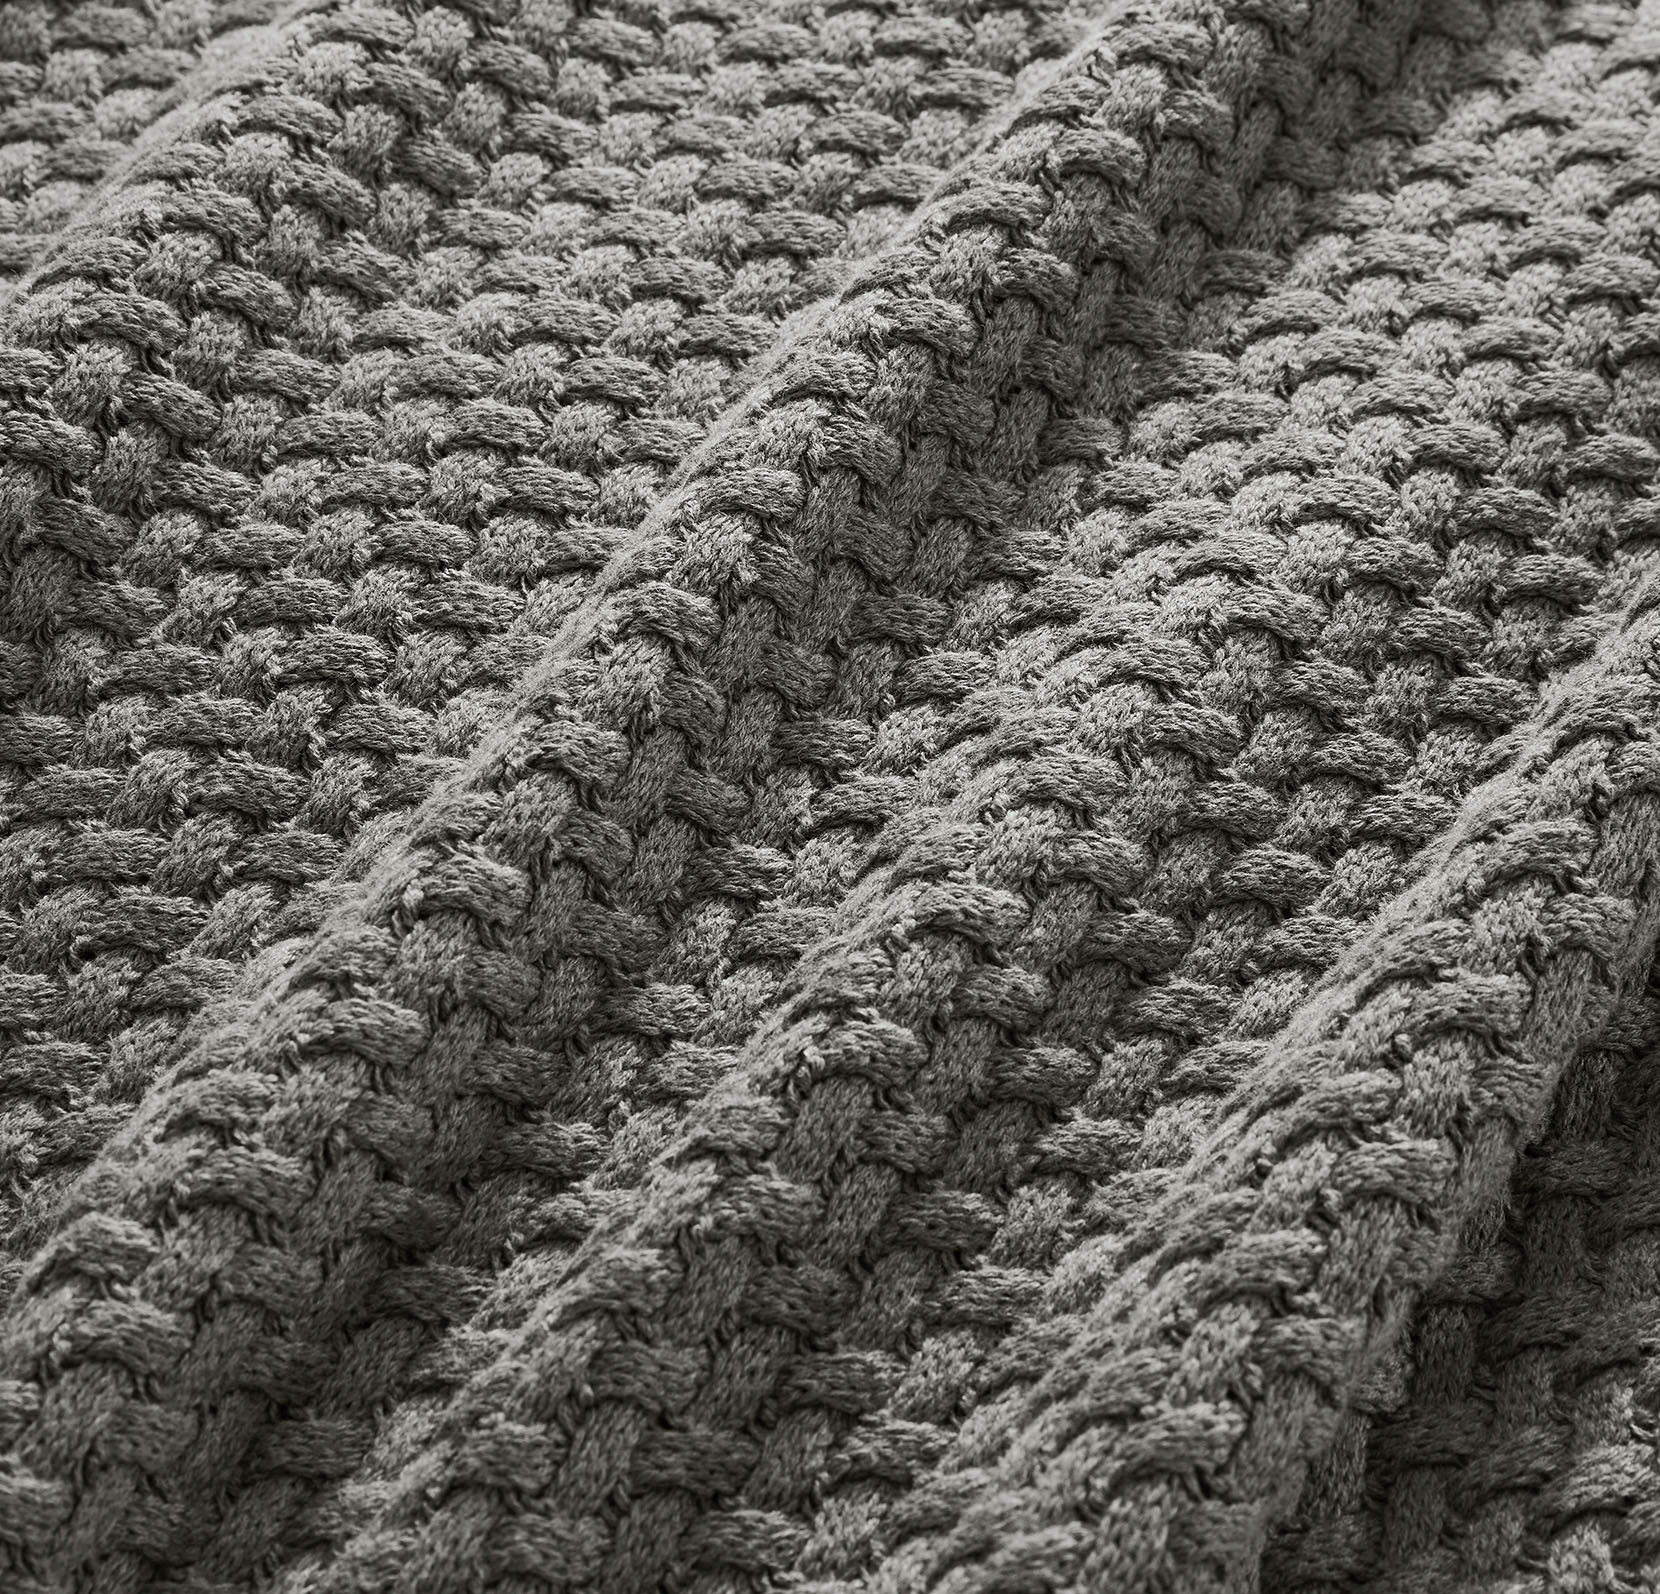 undefined Sweater Knit Throw Blanket - Slide 4